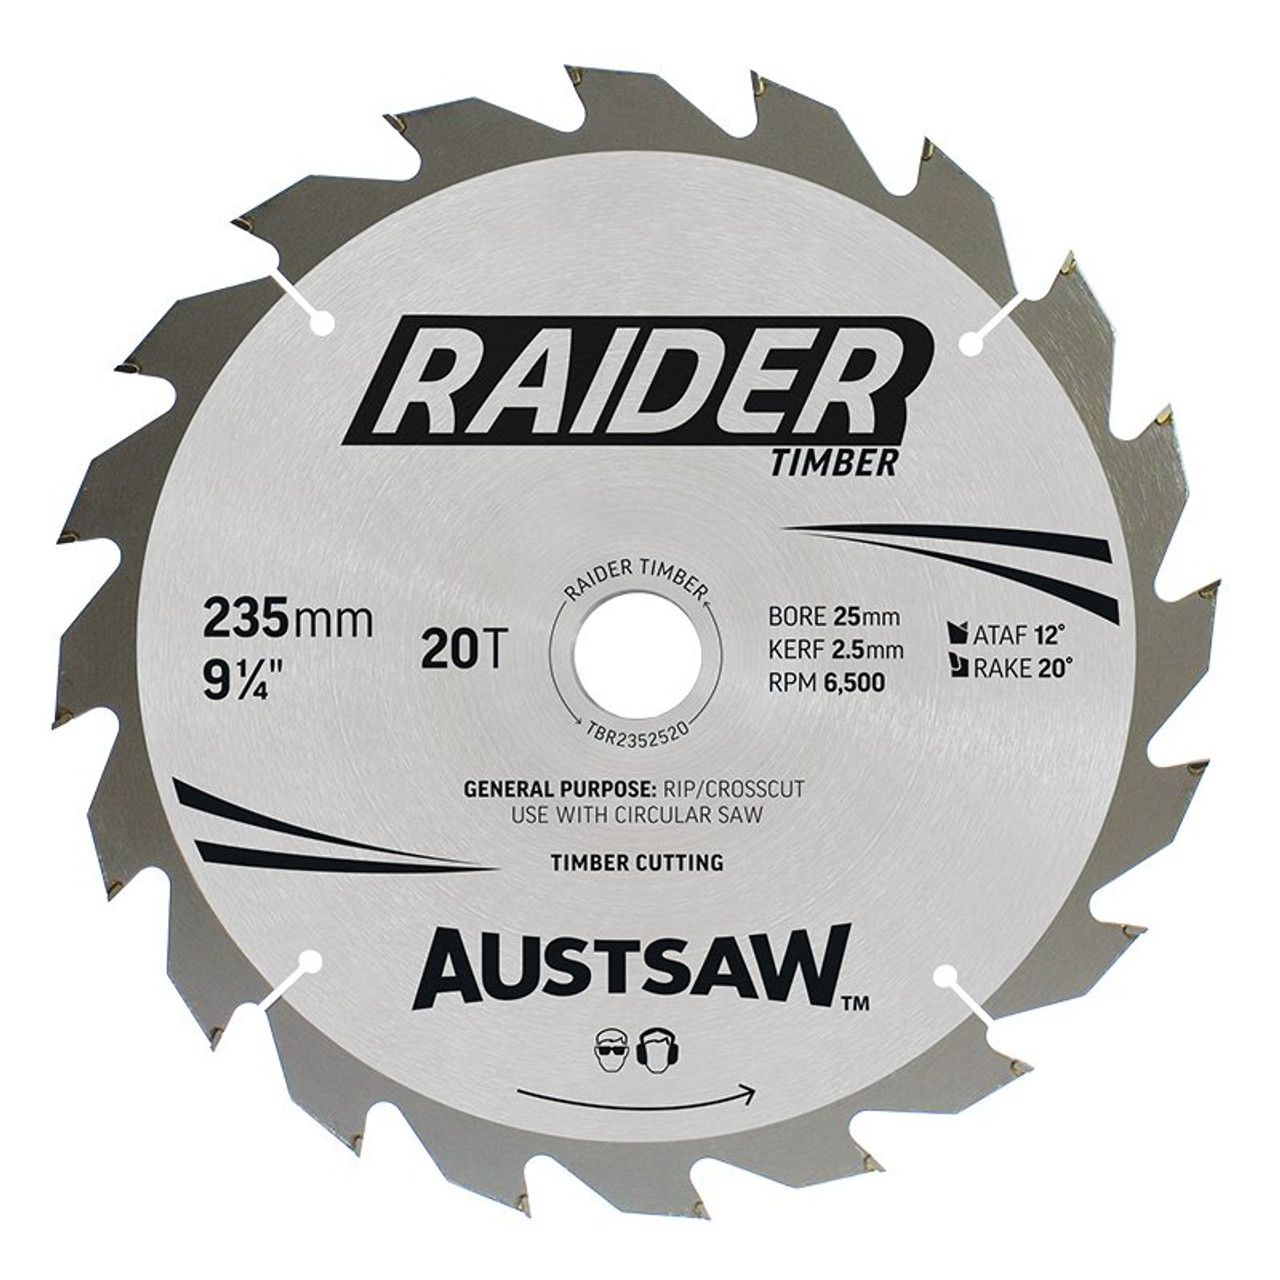 Austsaw Raider Timber Blade 235Mm X 25 Bore X 20 T Bulk Pack (X20)